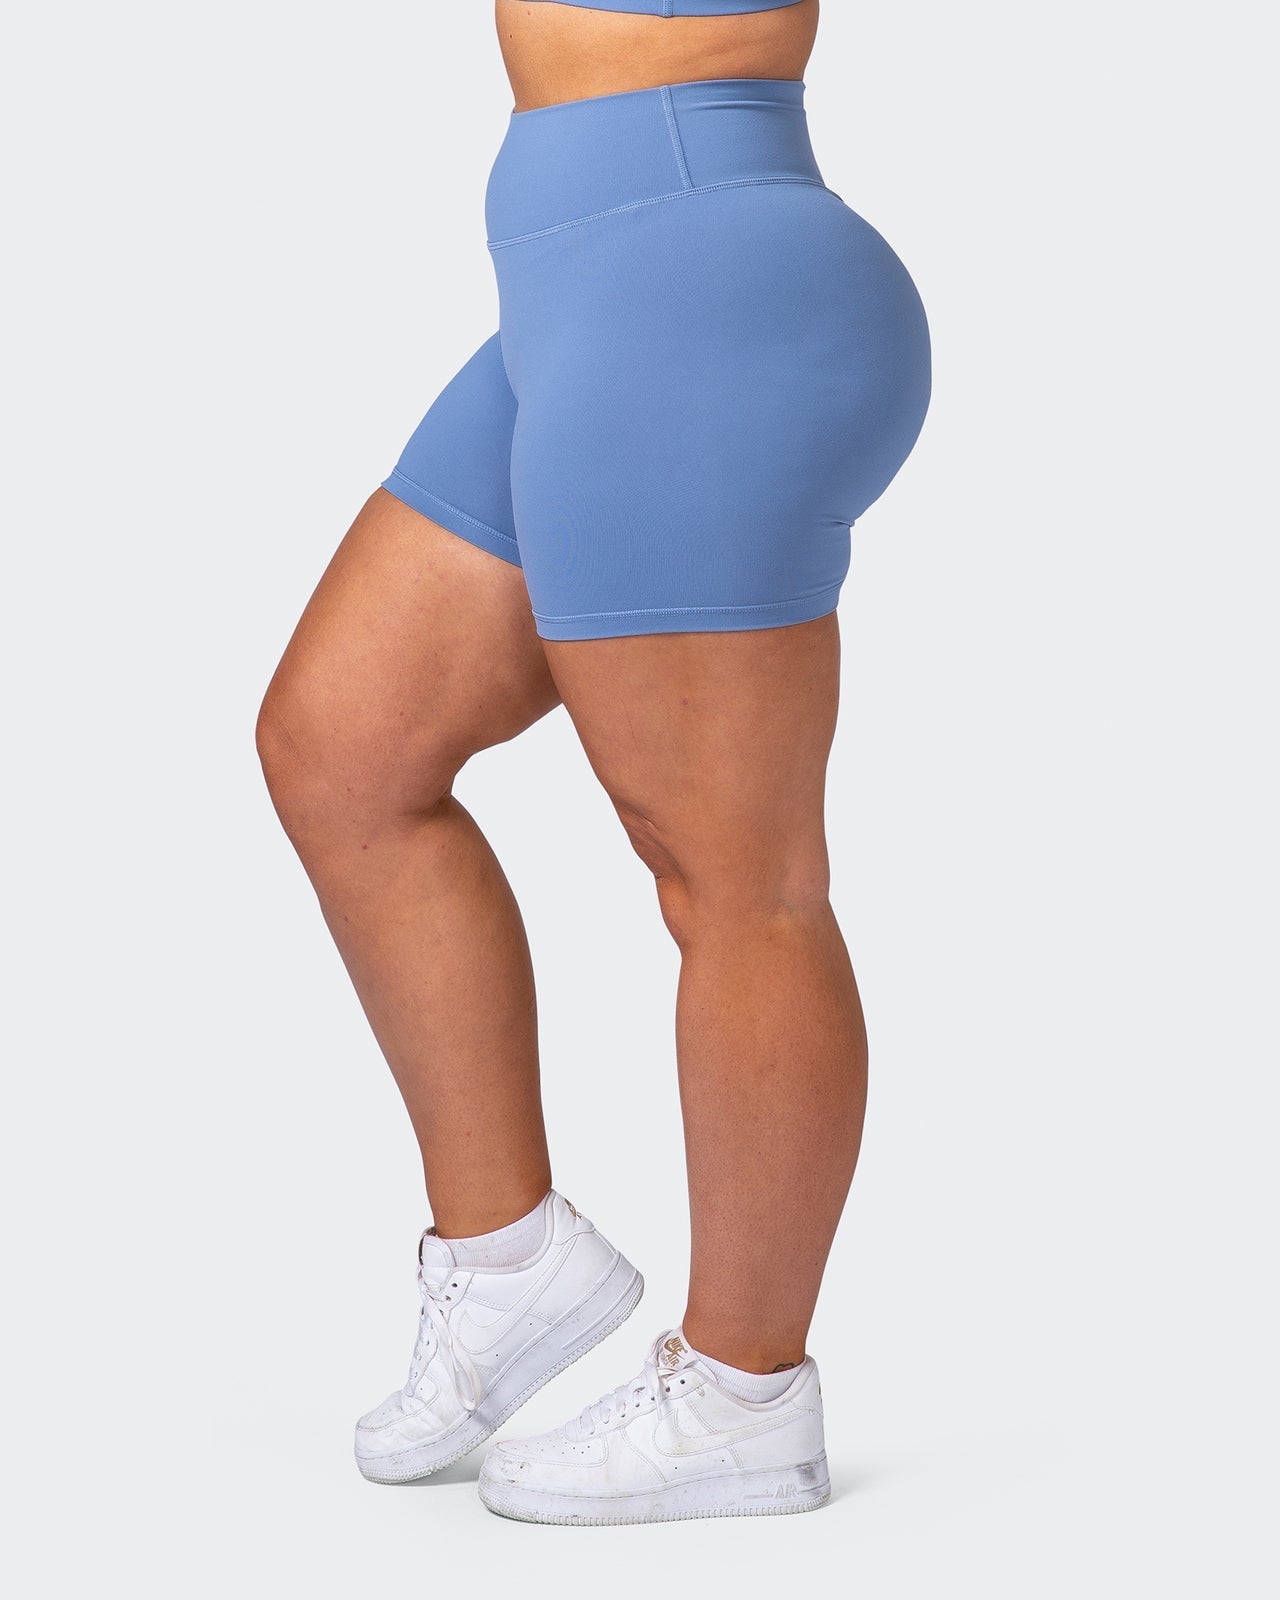 musclenation Shorts Signature Scrunch Bike Shorts-Powder Blue